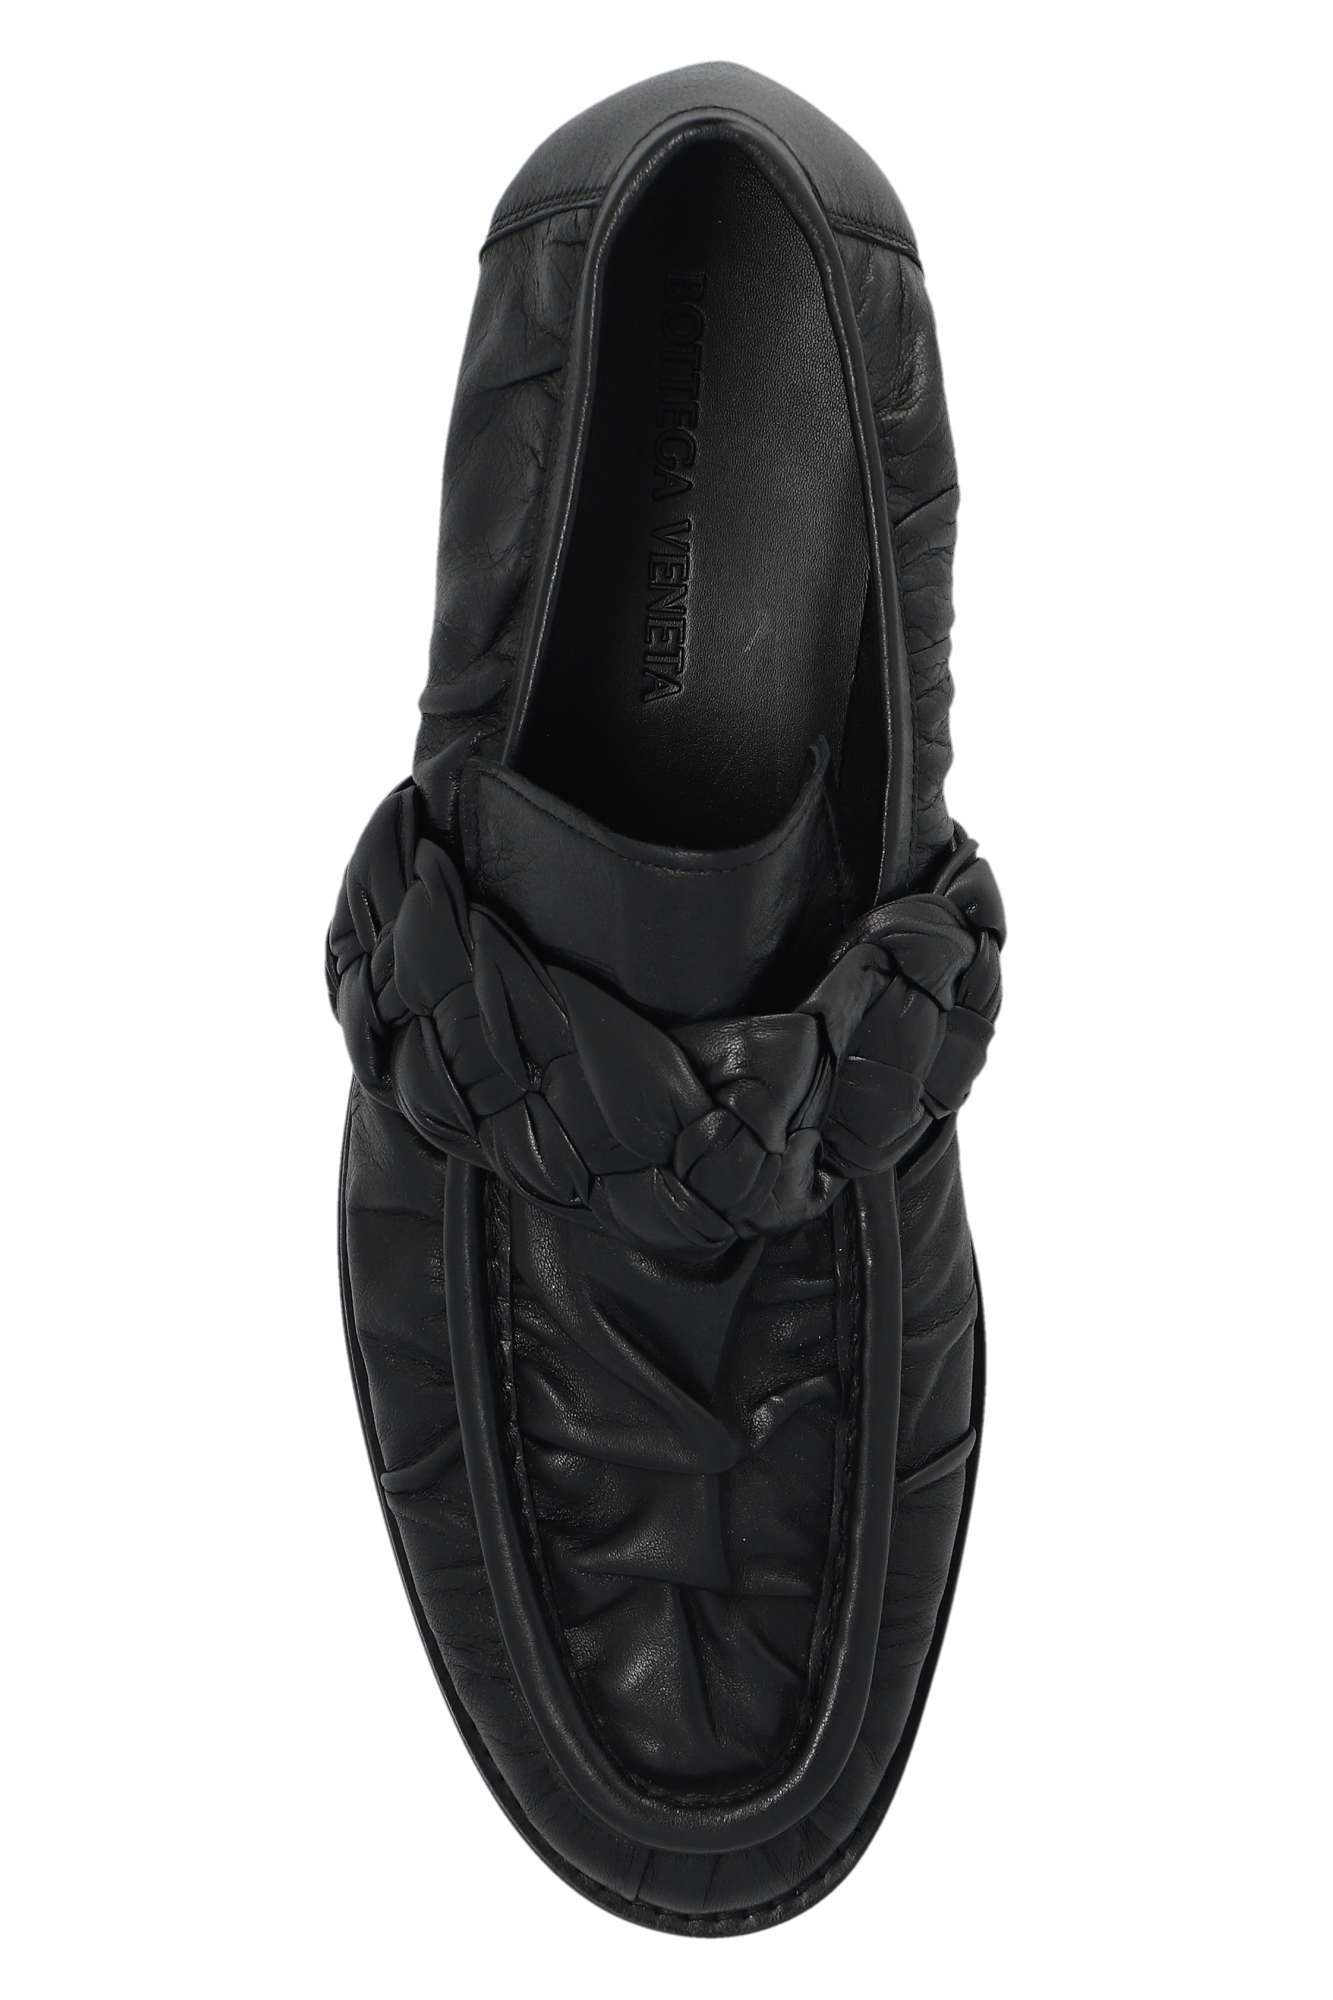 Bottega Veneta ‘Astaire’ leather shoes